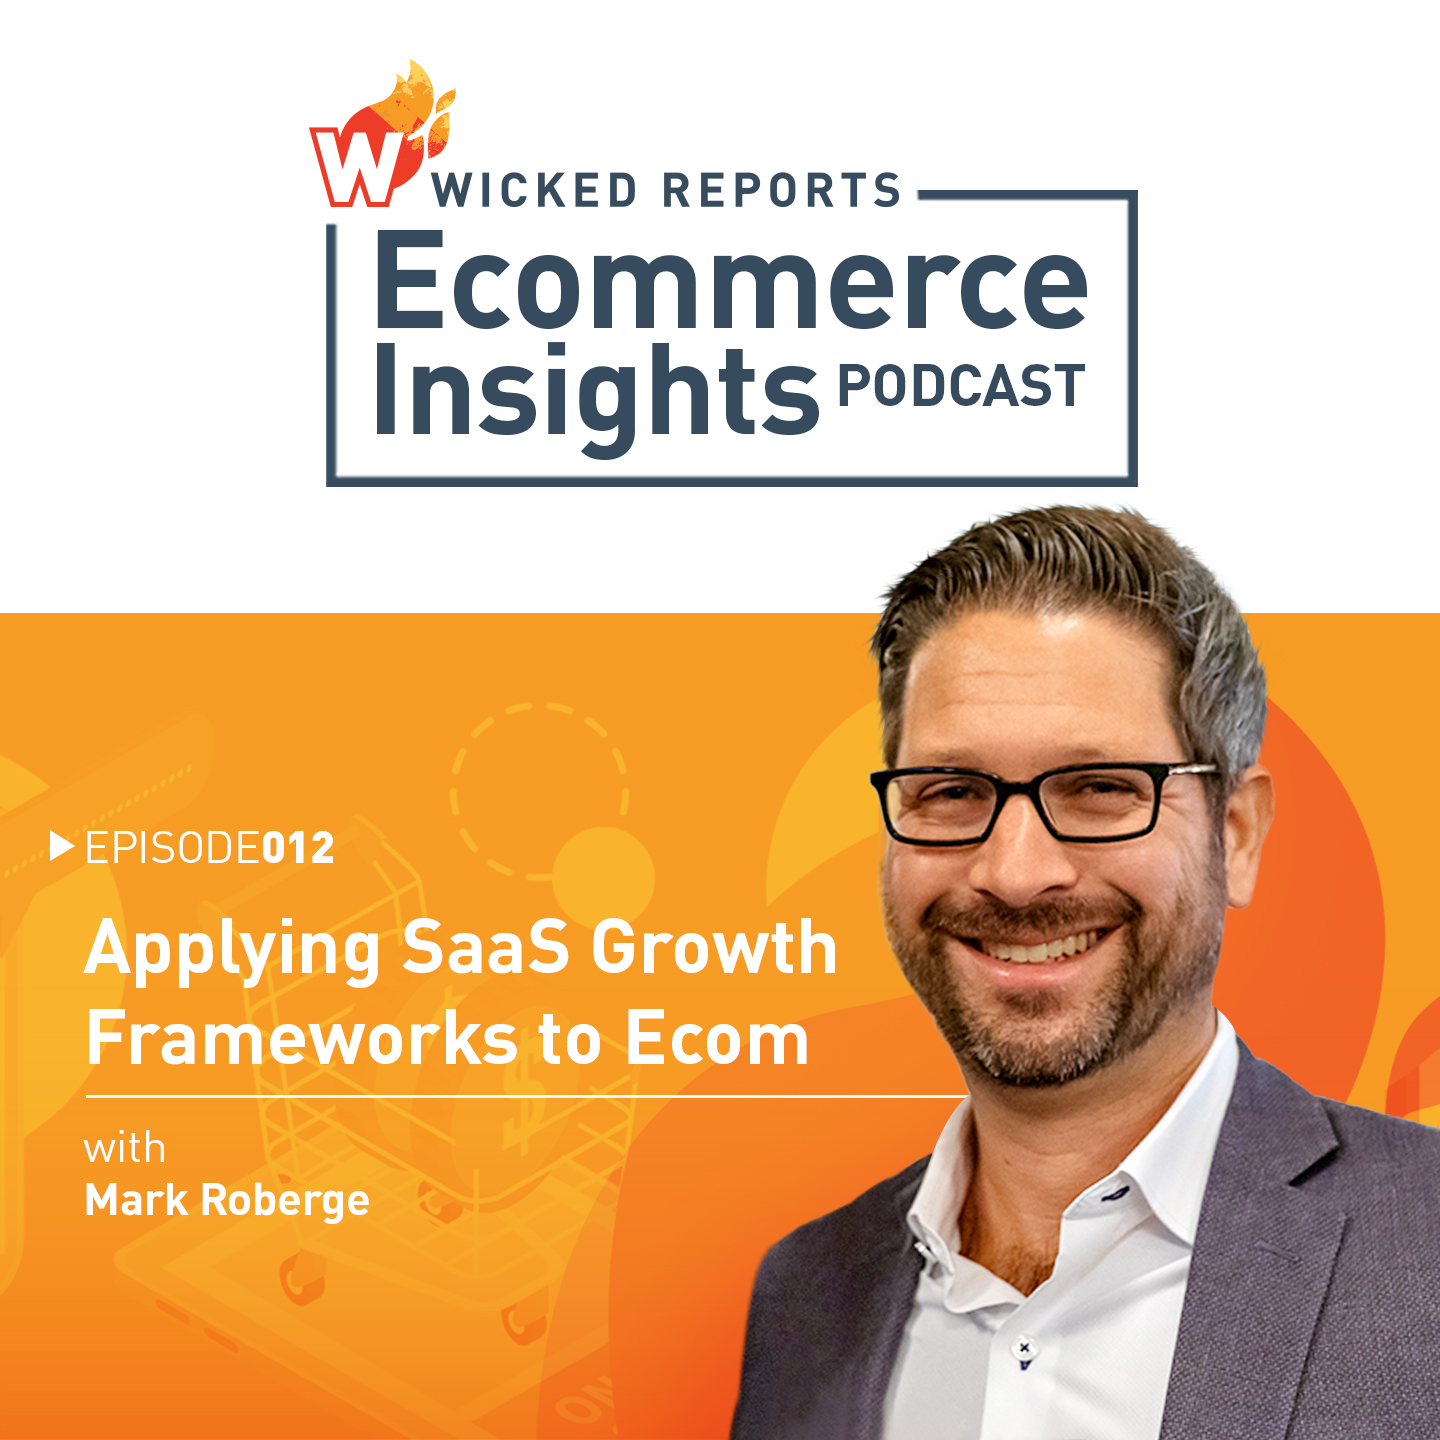 Applying SaaS Growth Frameworks to Ecom with Mark Roberge